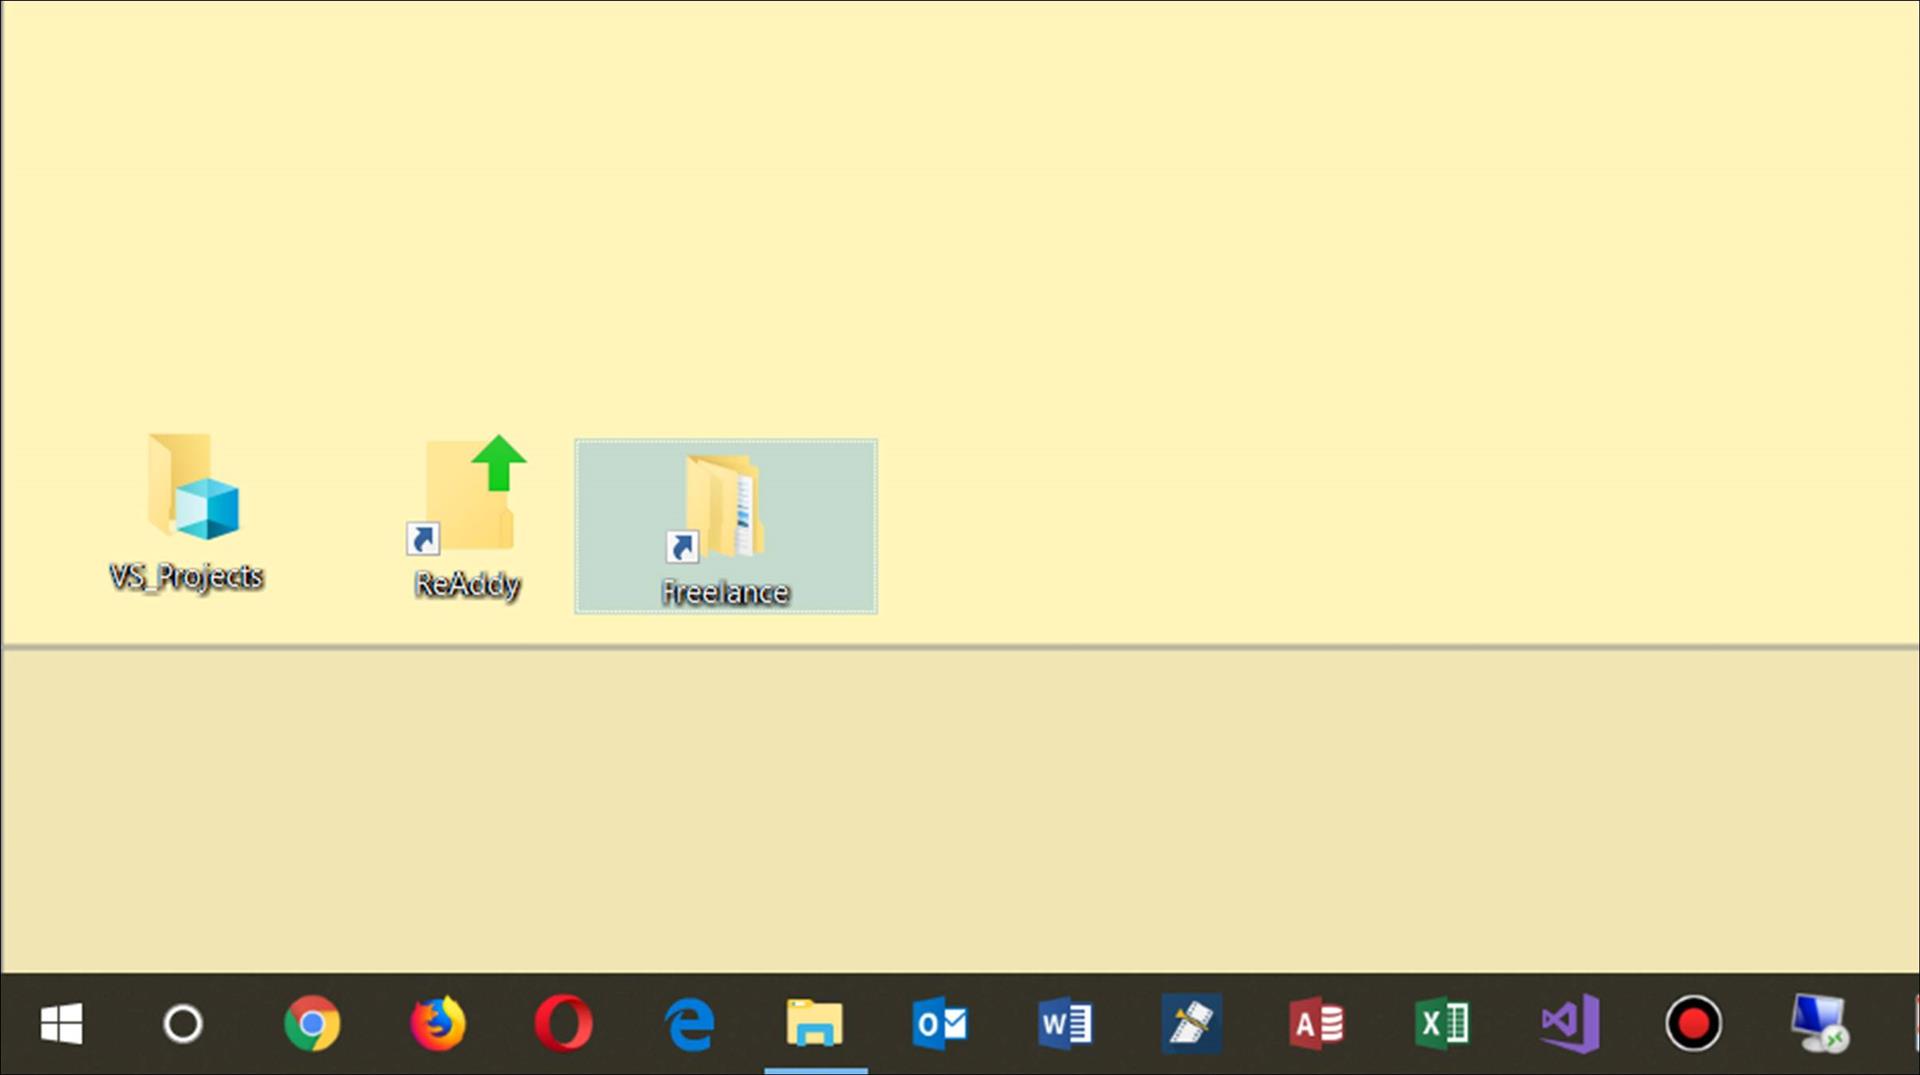 best desktop icon pack for windows 10